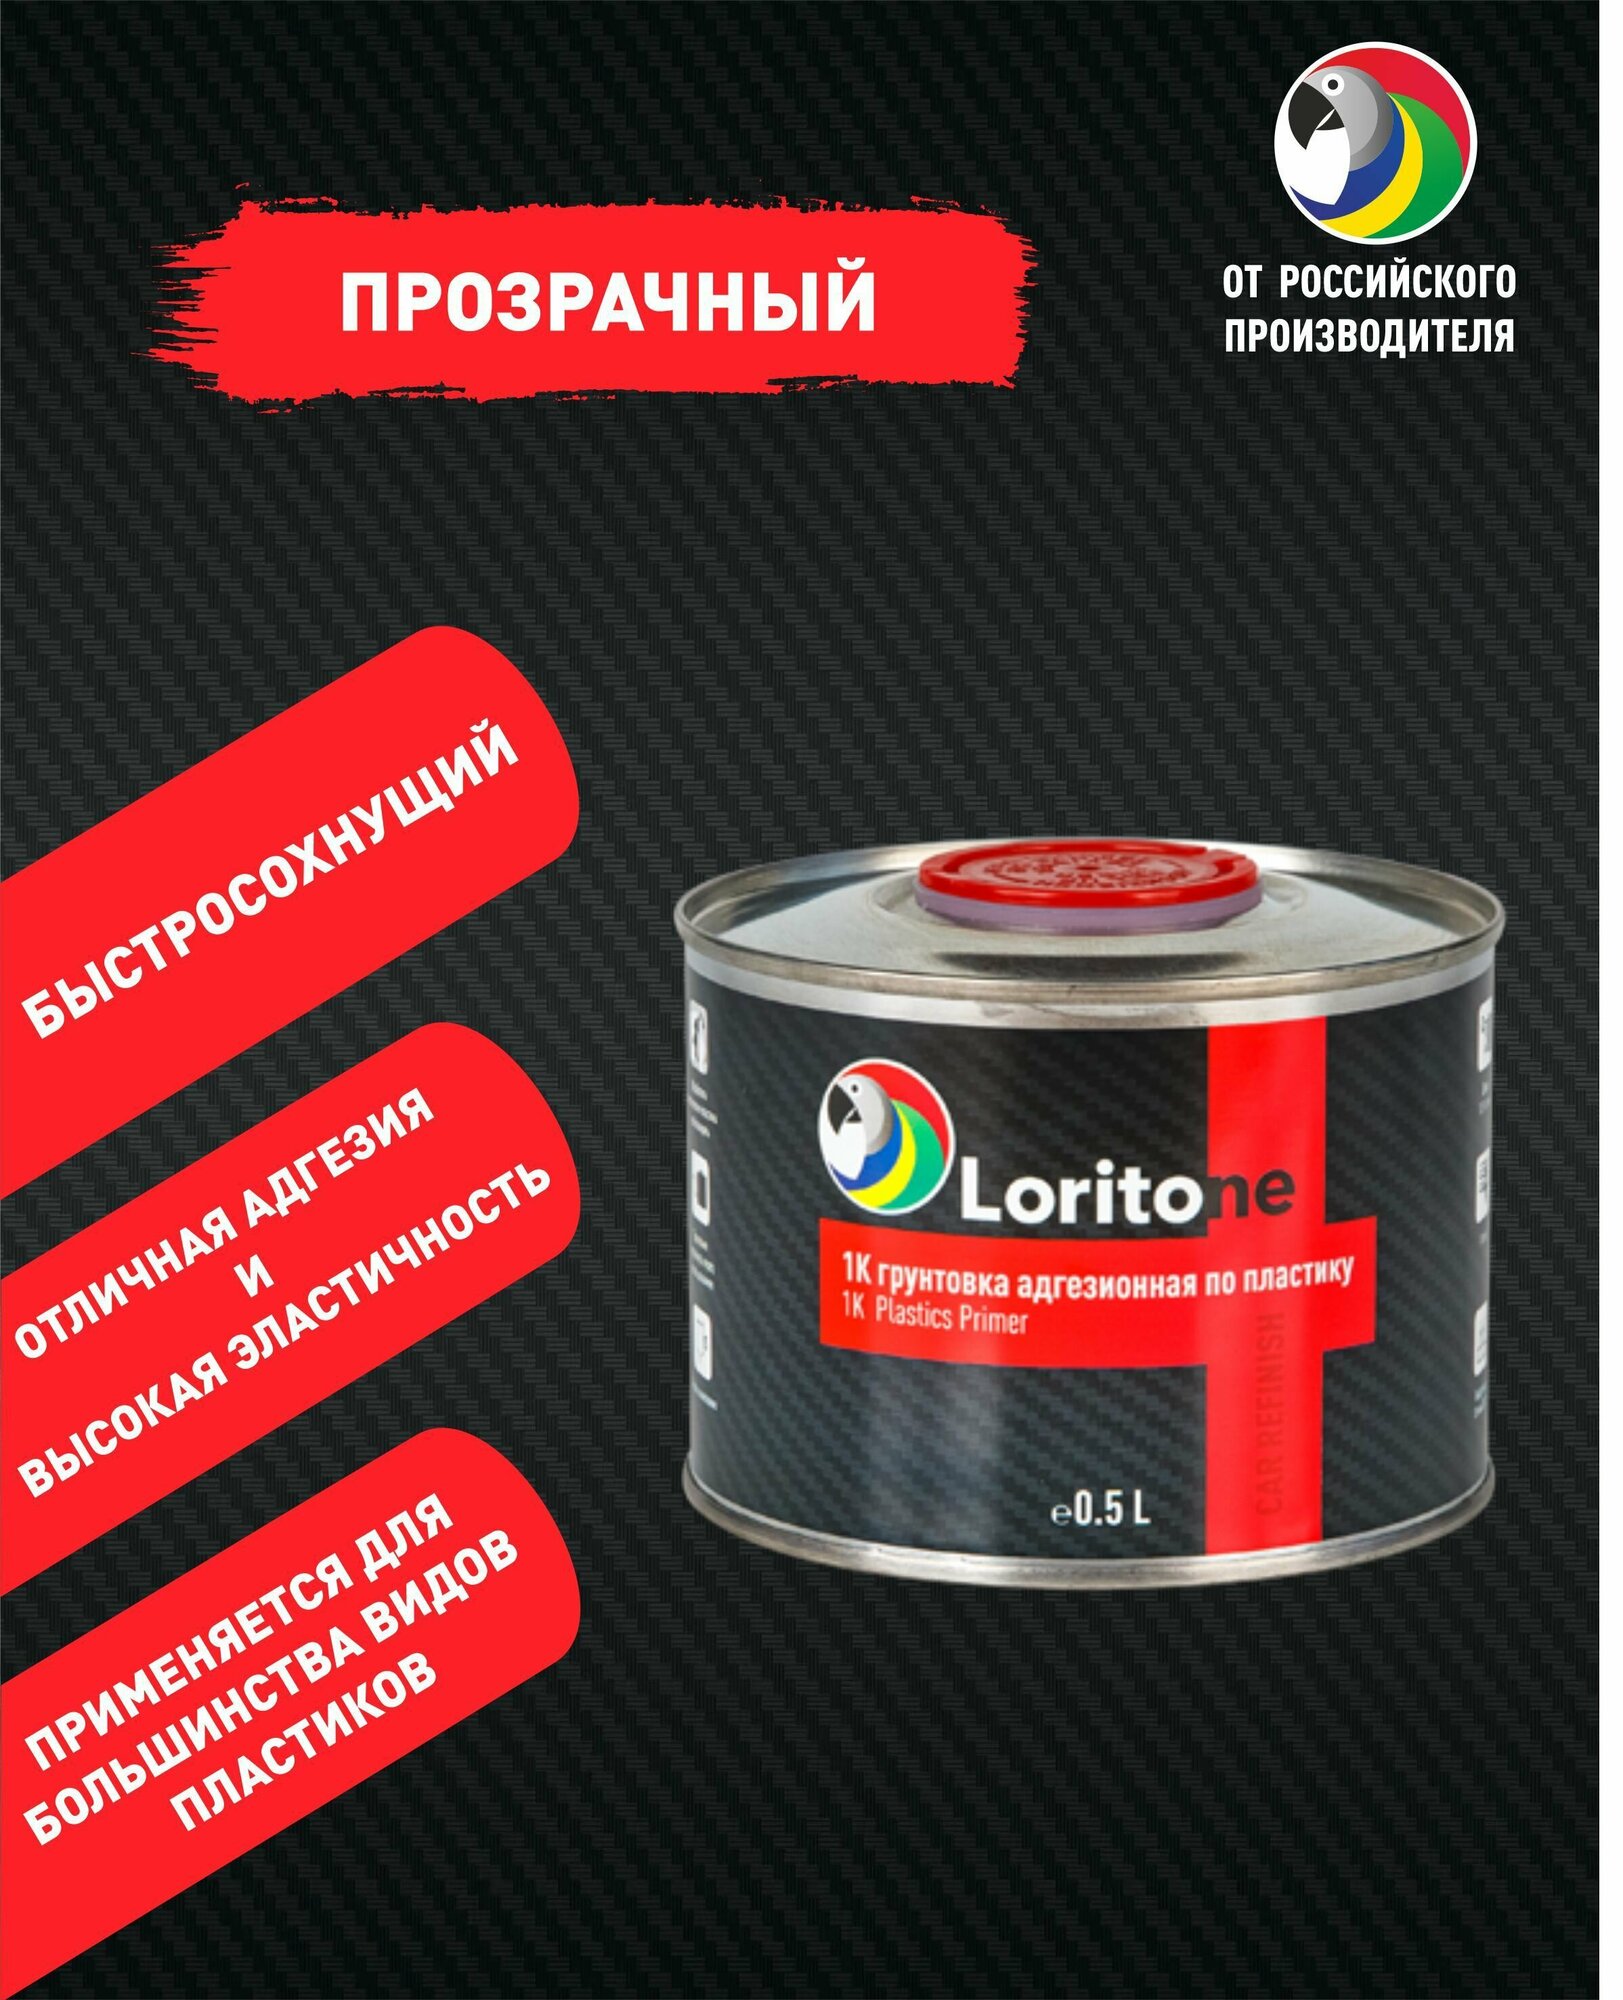 Loritone Грунт адгезионный по пластику 1k PP прозрачный, 0.5л.